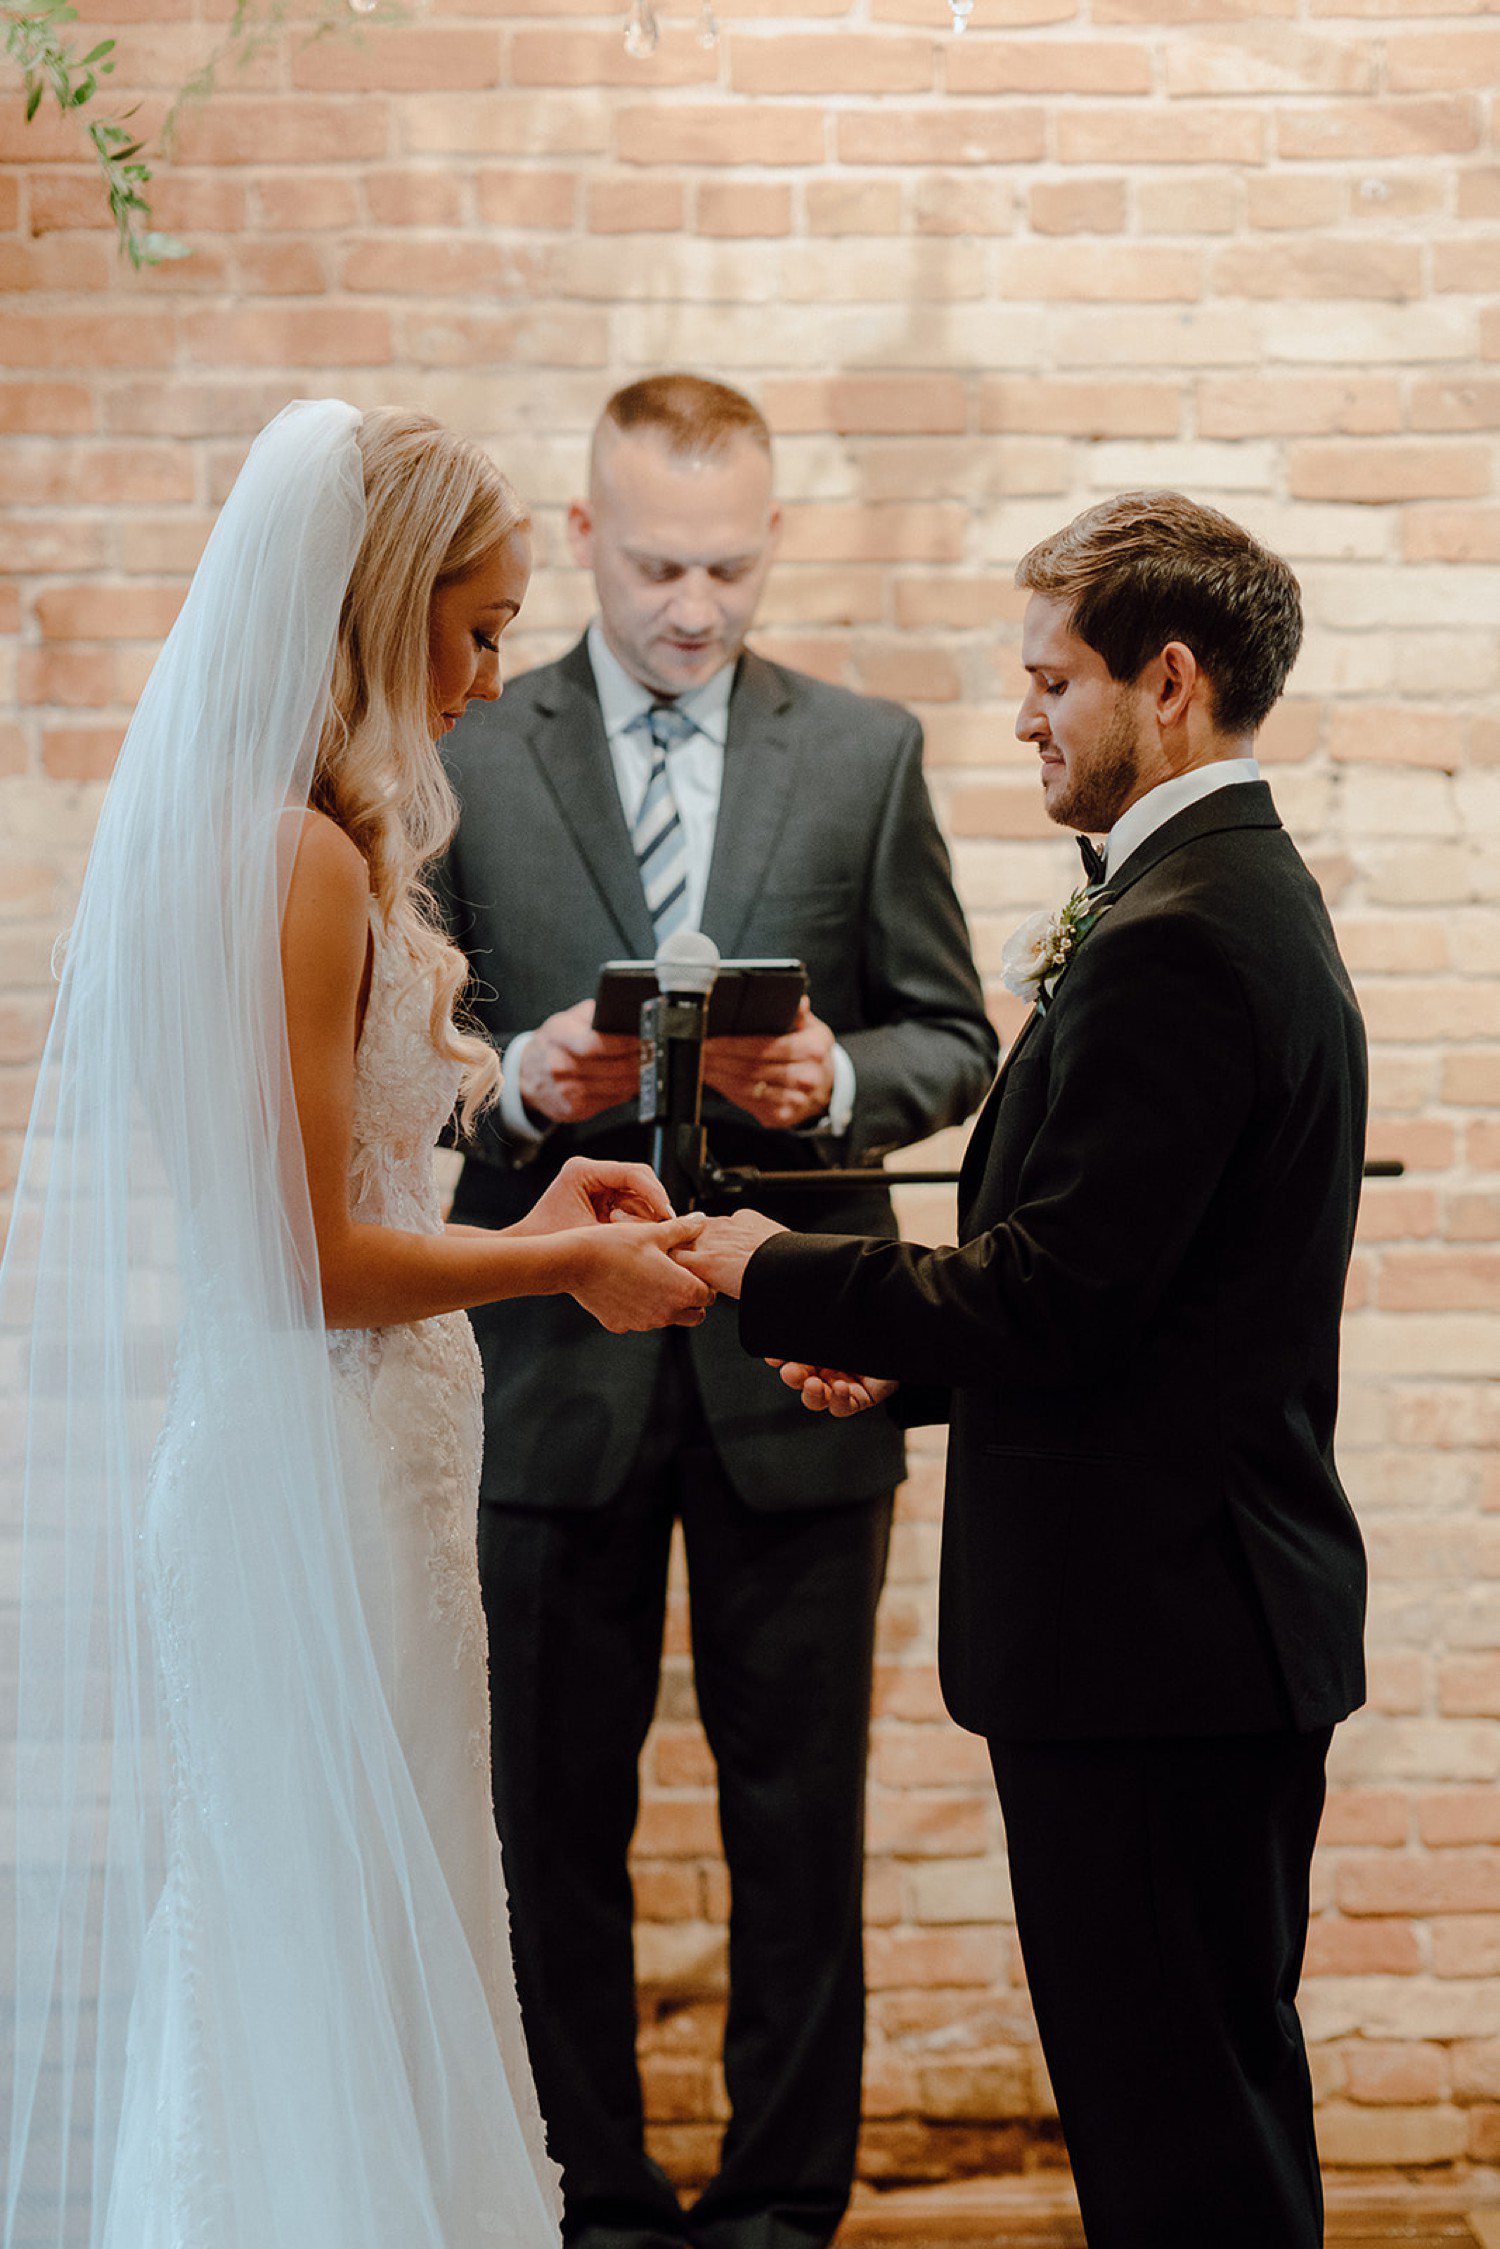 Wedding ring exchange during ceremony 